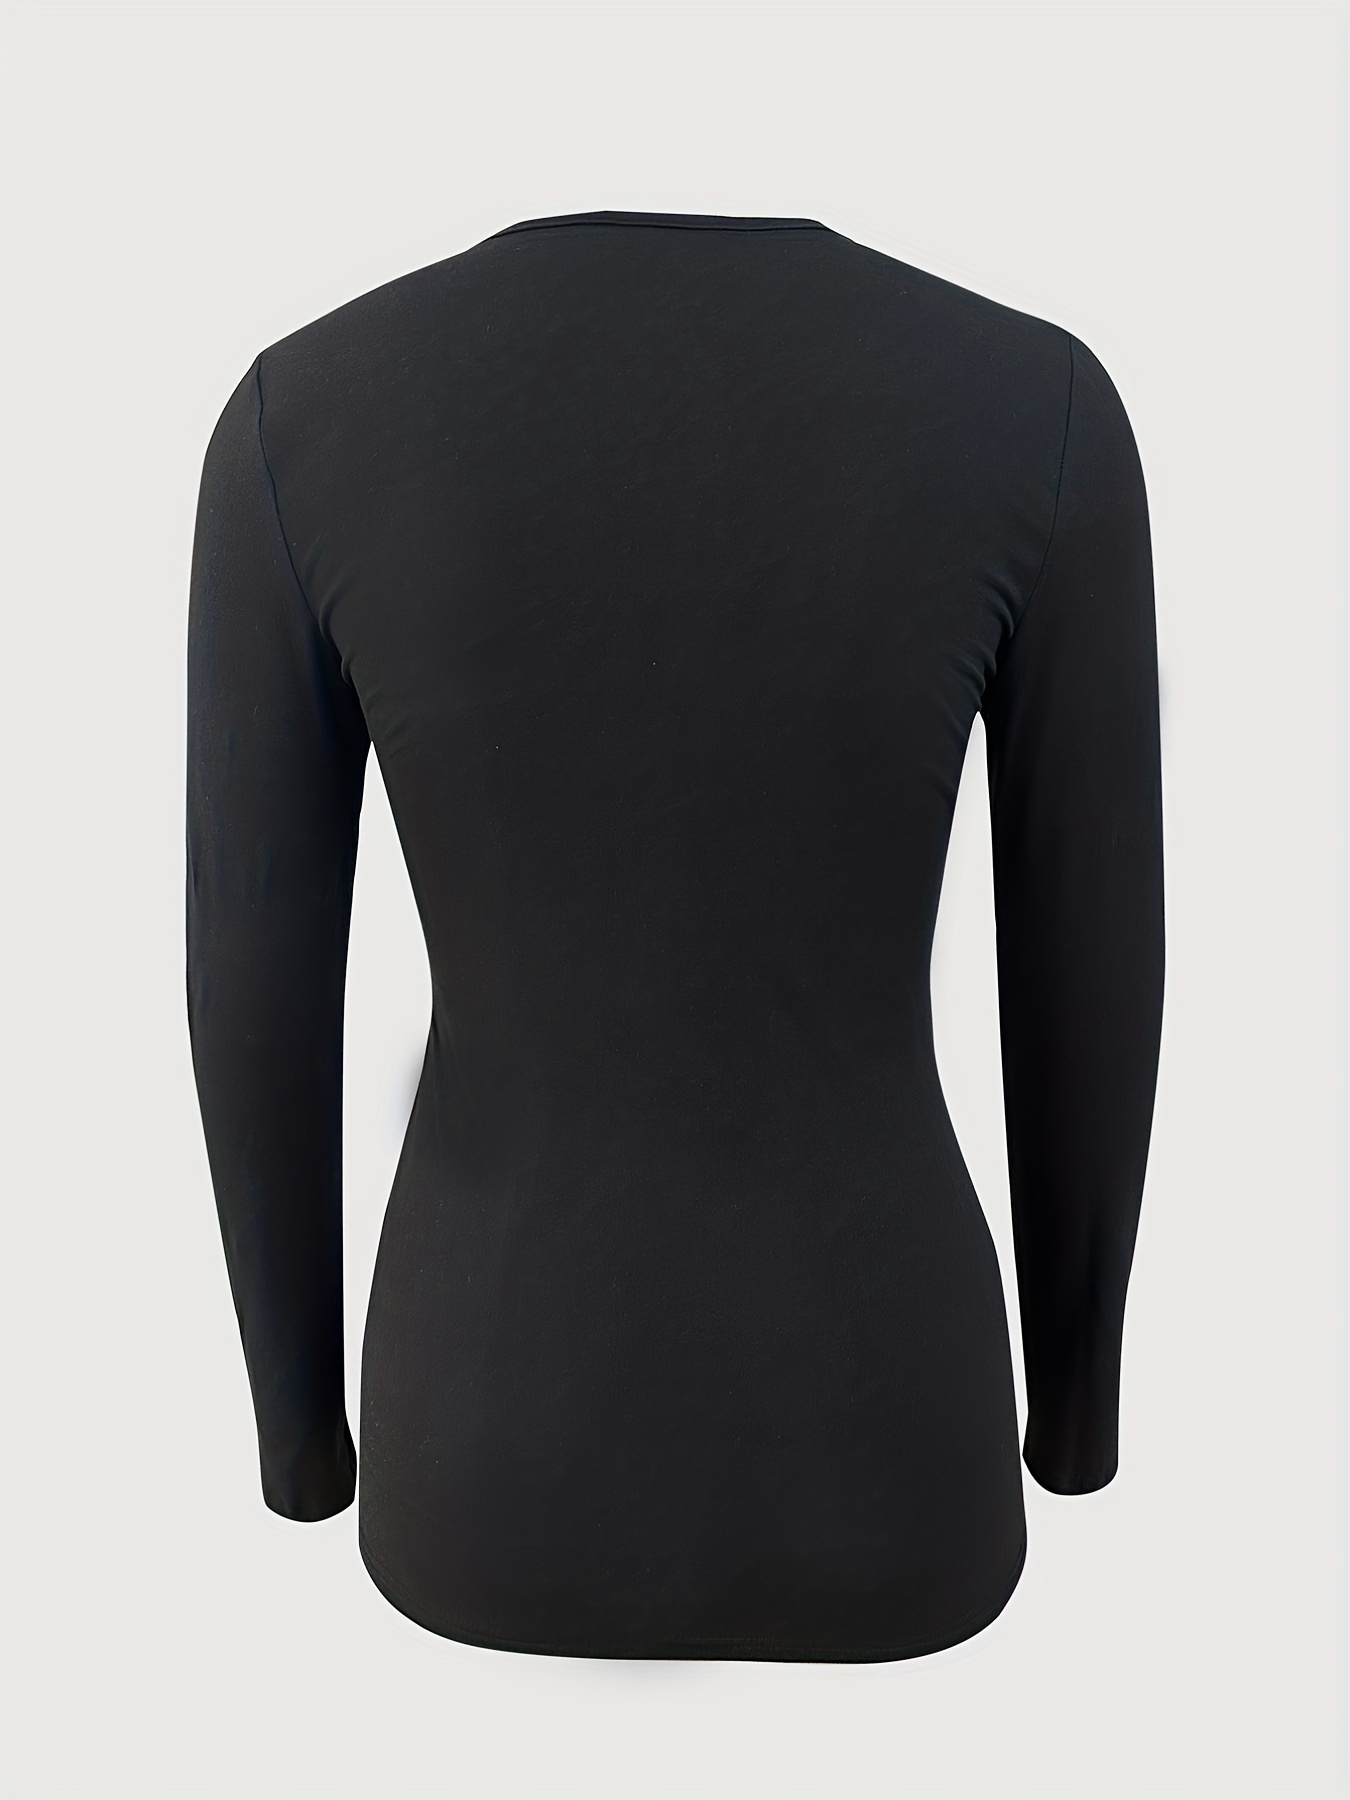 Buy Women Black Solid Long Sleeves Casual Shirt Online - 729584